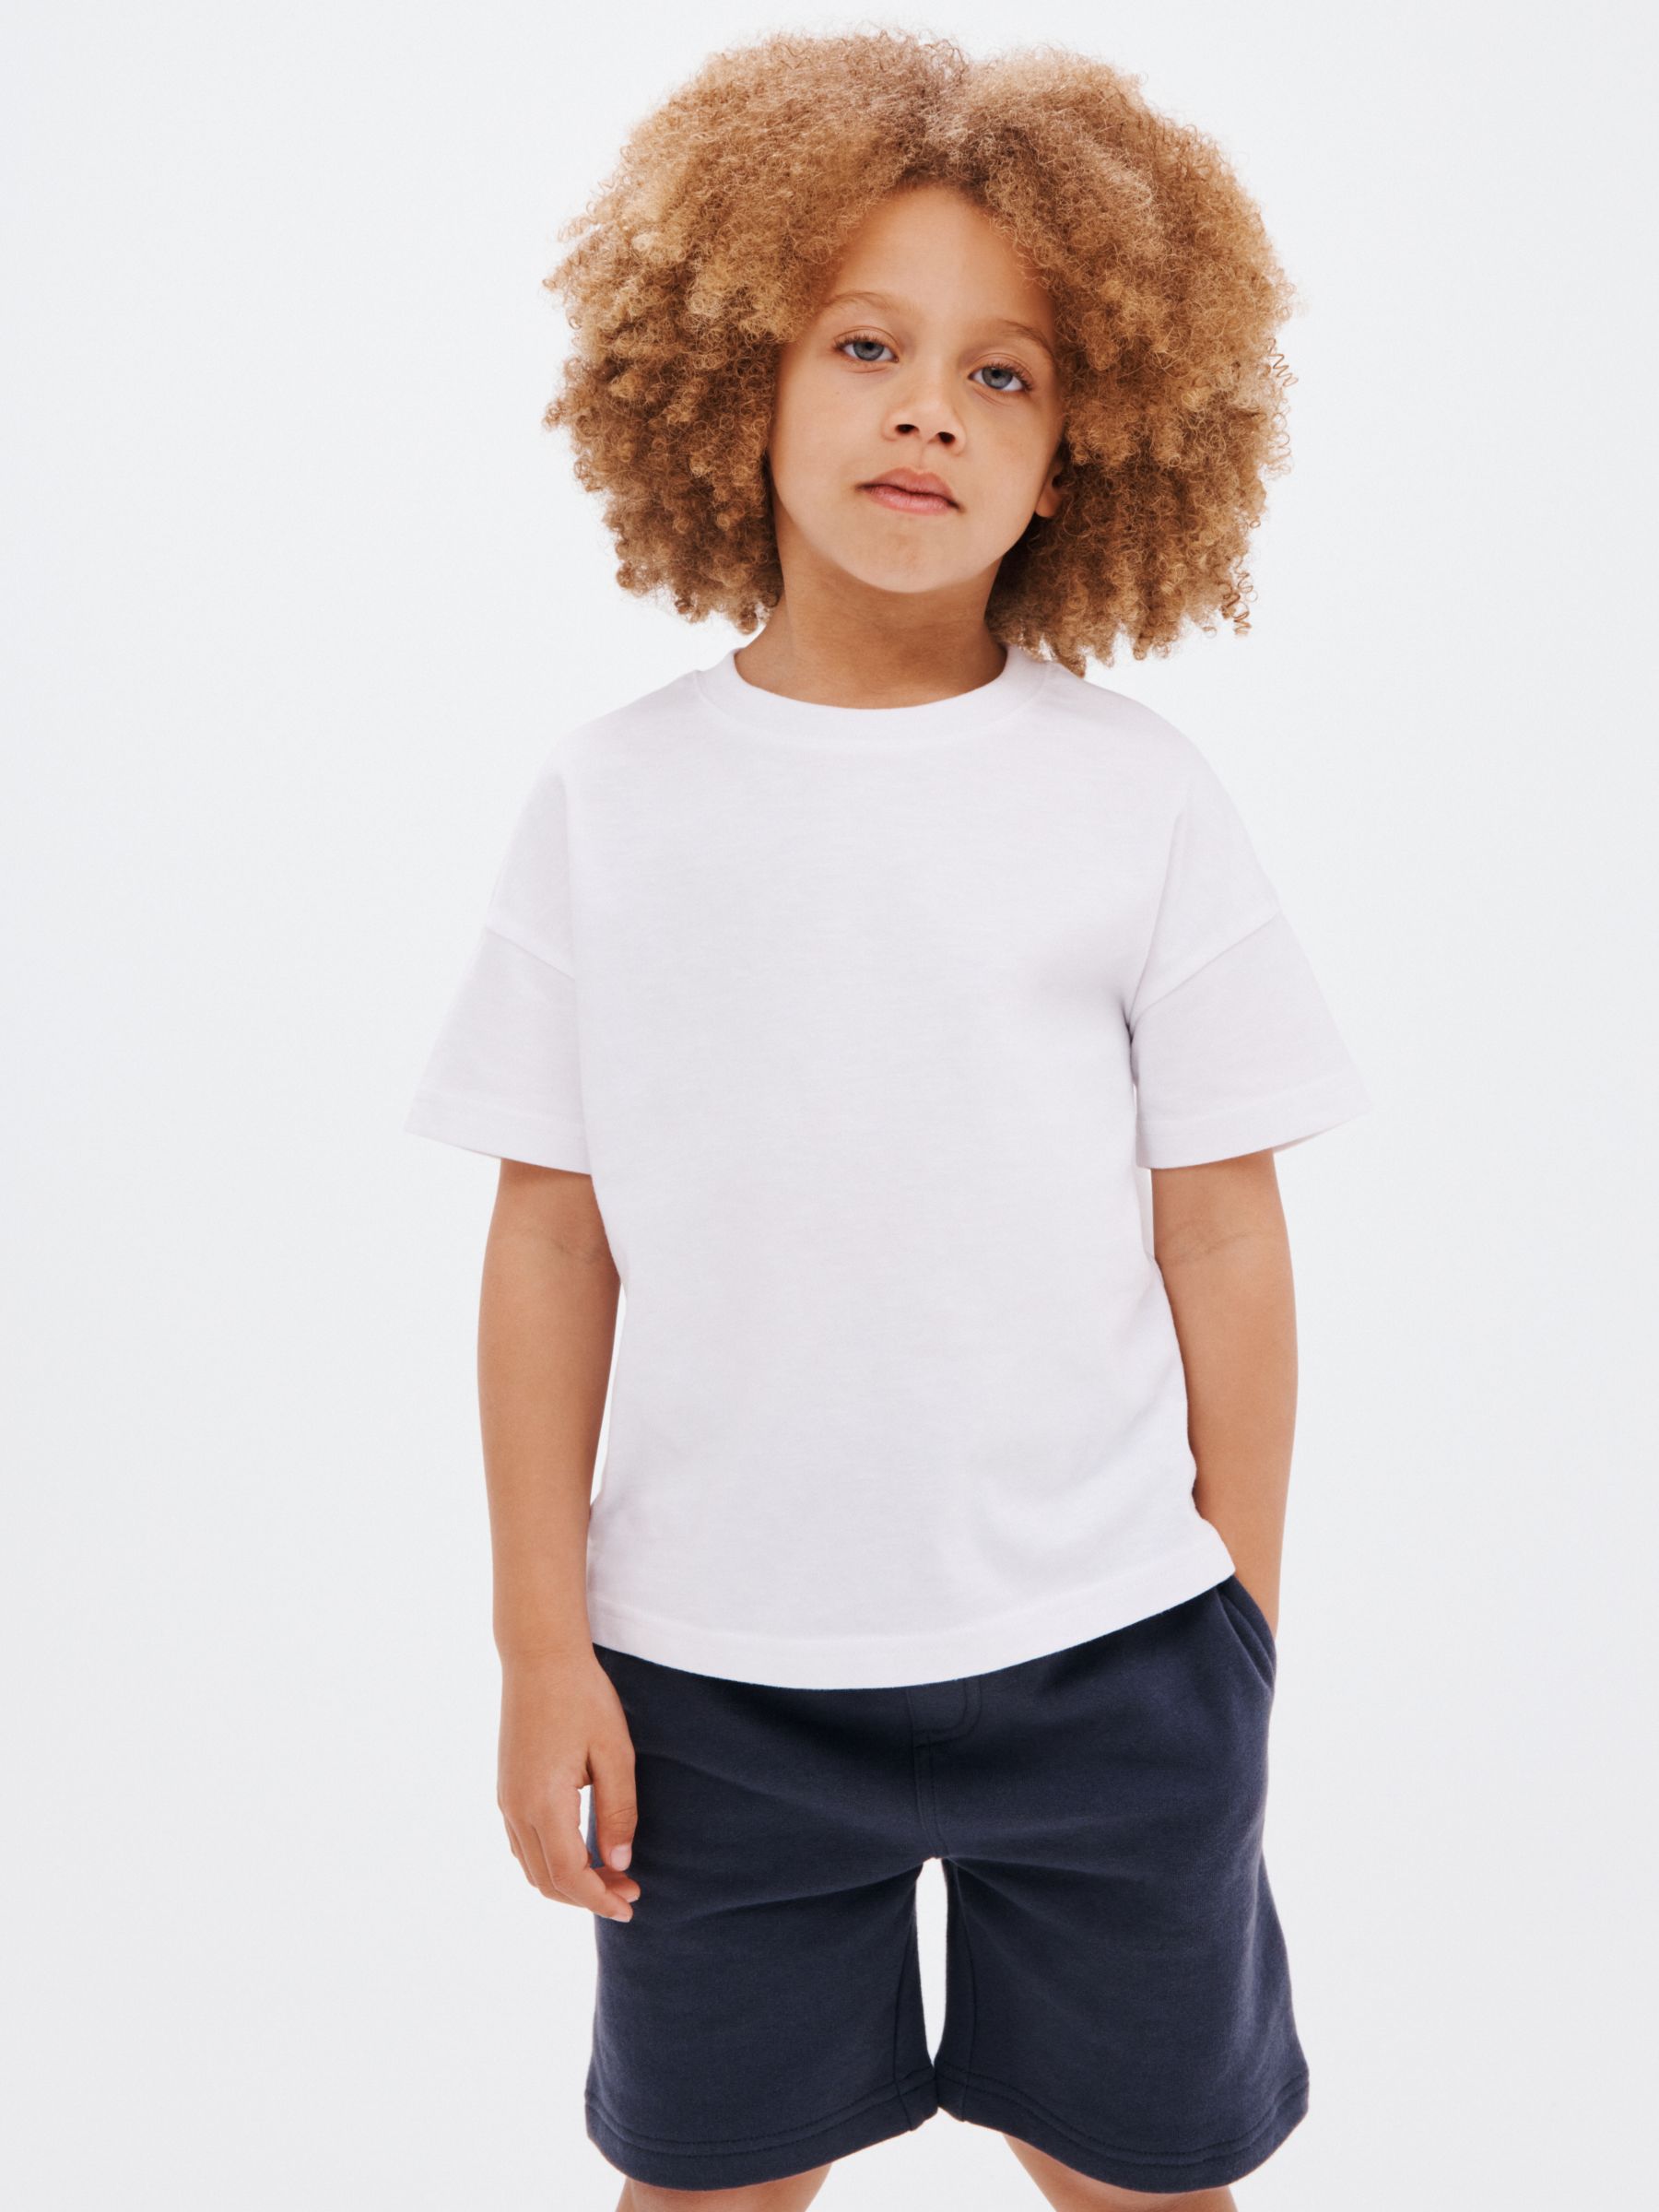 John Lewis ANYDAY Kids' Plain Cotton Short Sleeve T-Shirt, White, 12 years